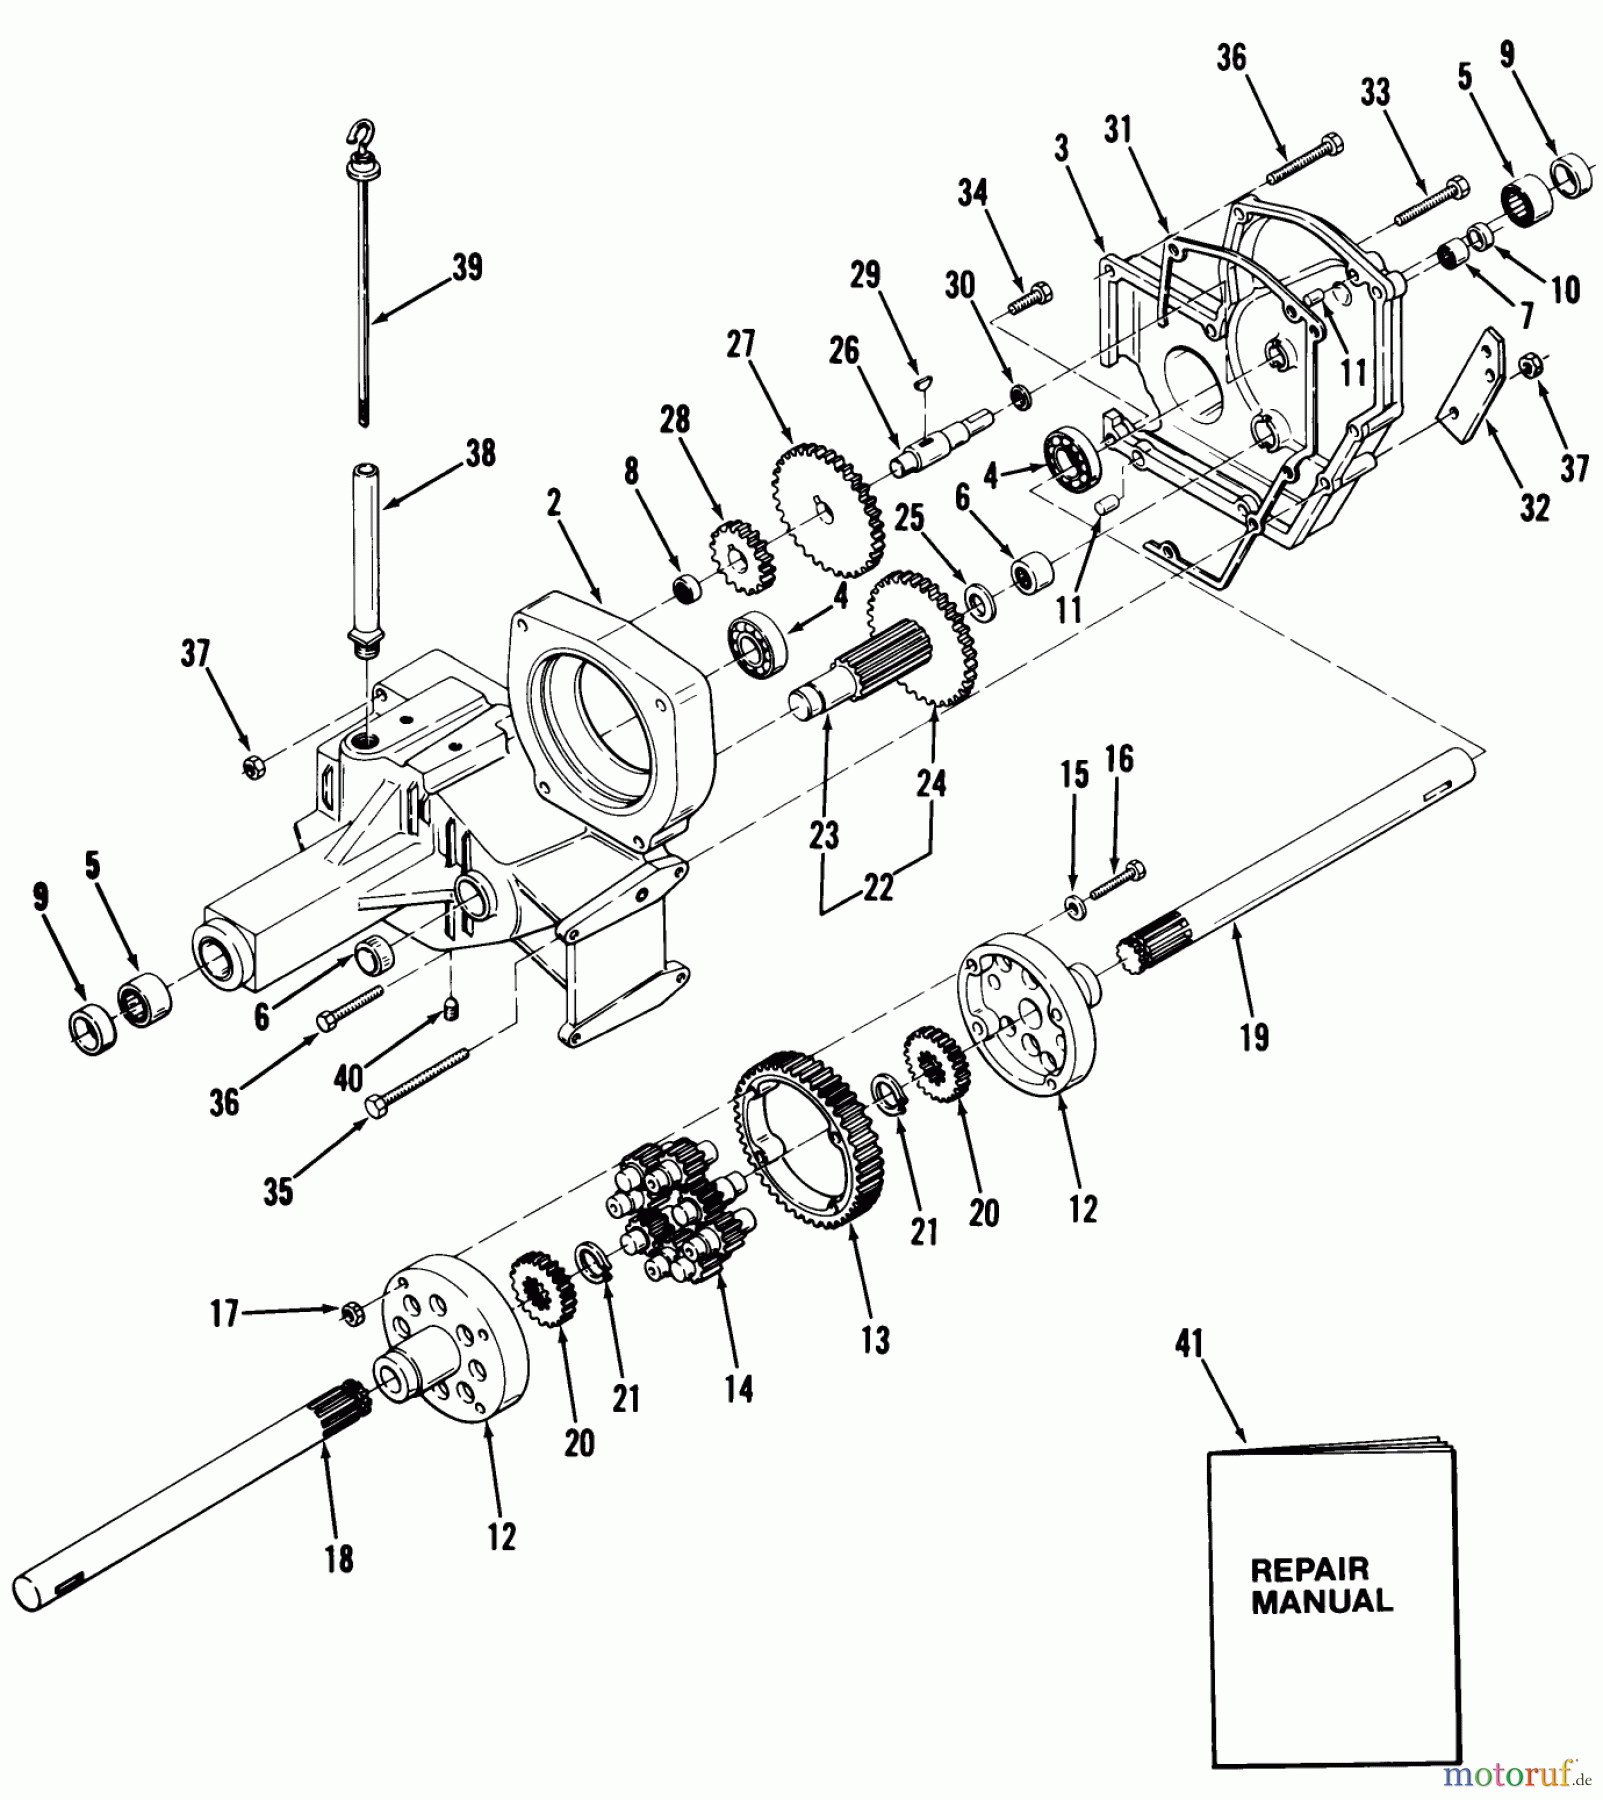  Toro Neu Mowers, Lawn & Garden Tractor Seite 1 01-12K803 (C-125) - Toro C-125 8-Speed Tractor, 1982 TRANSAXLE